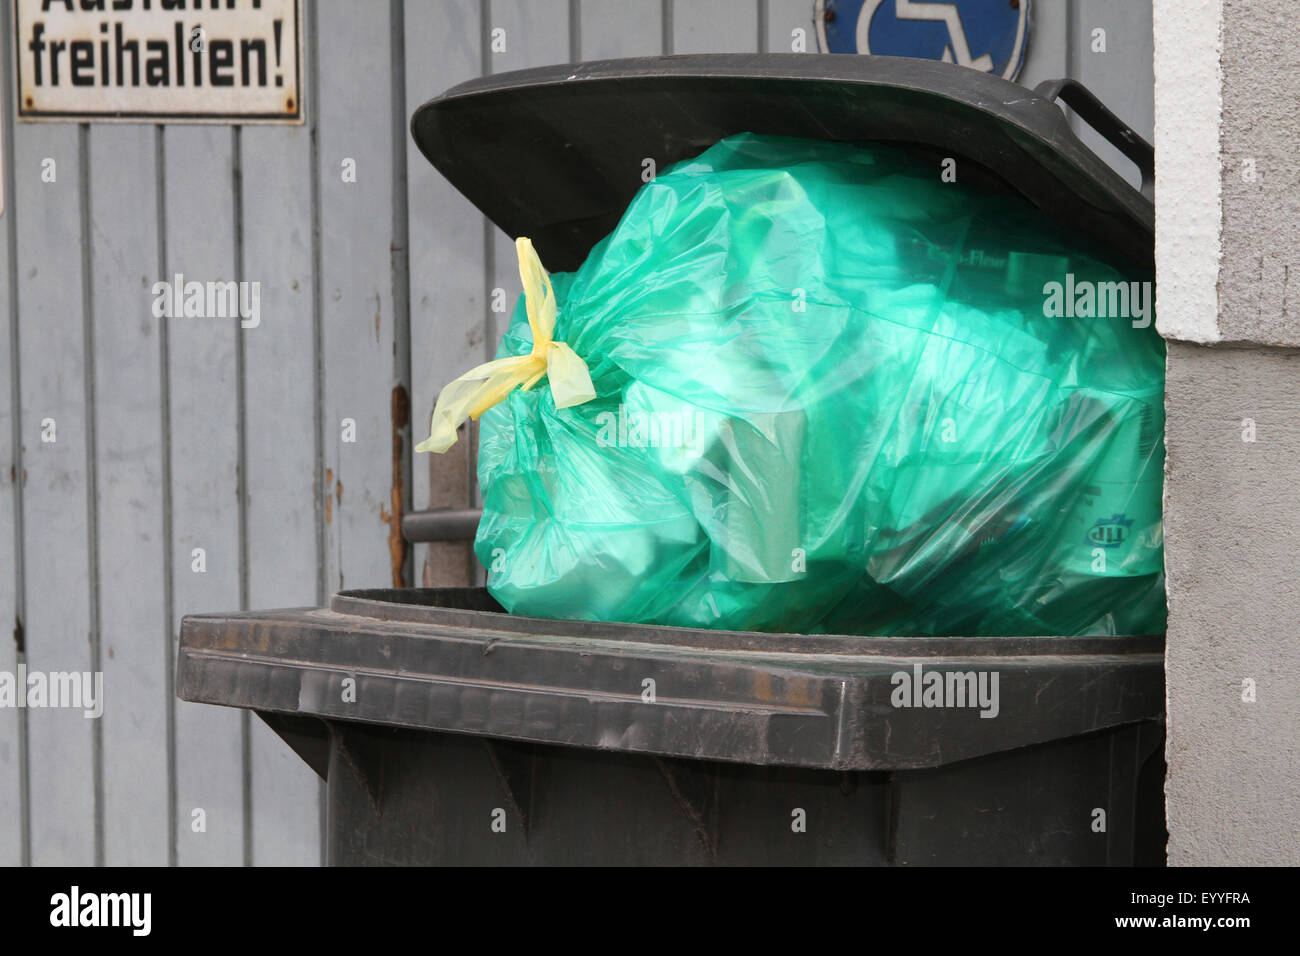 overfilled waste bin, Germany Stock Photo